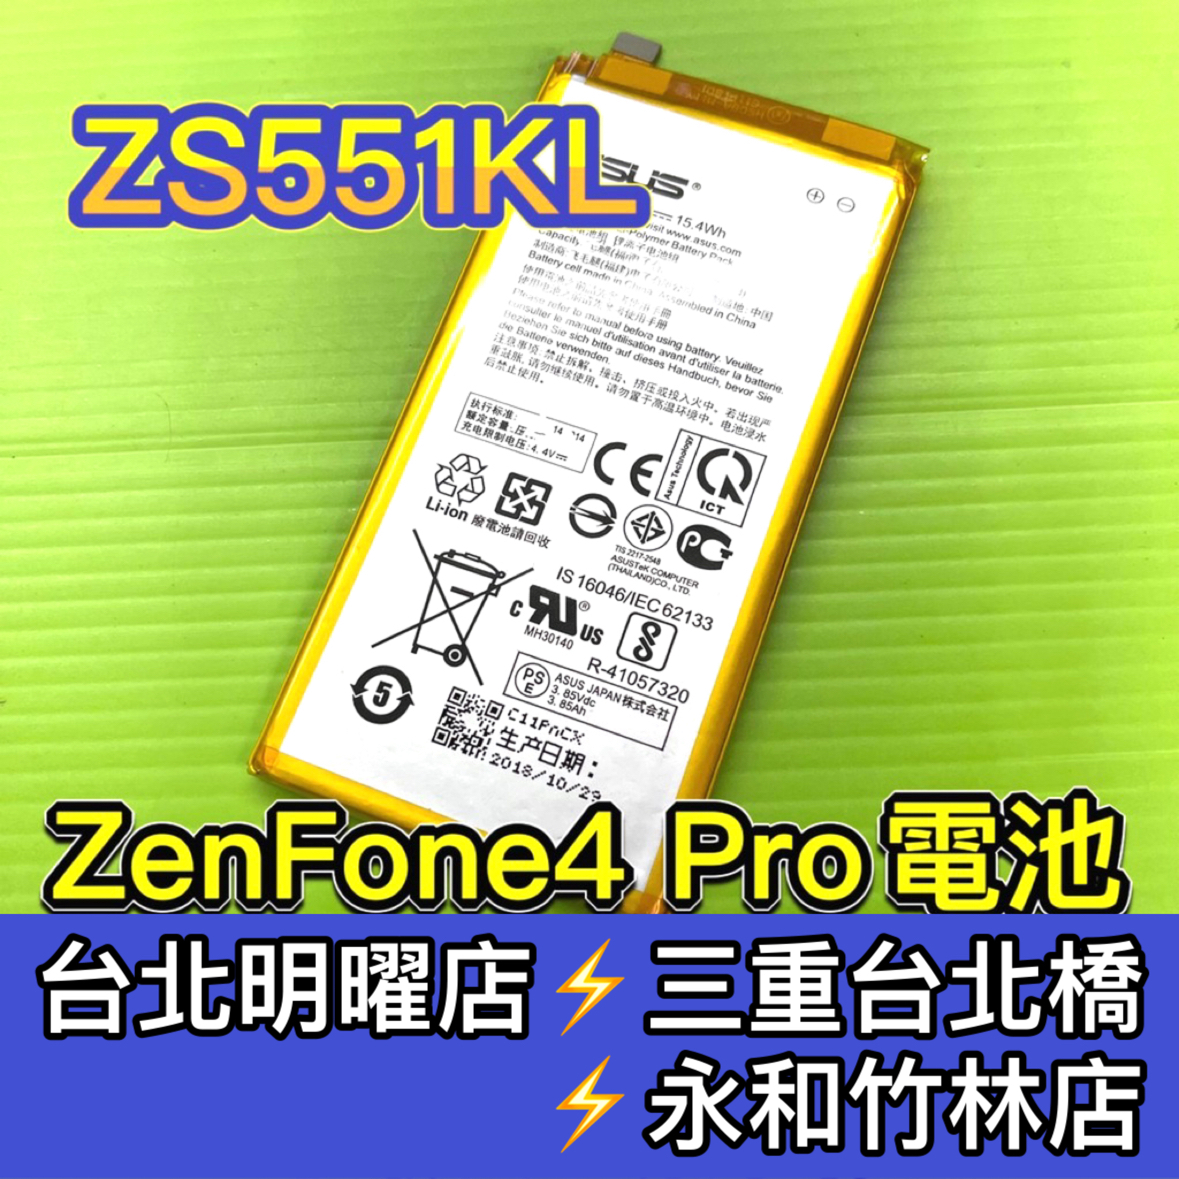 ASUS 華碩 ZenFone 4 Pro 電池 zenfone4pro電池 ZS551K Z01GD 電池維修更換